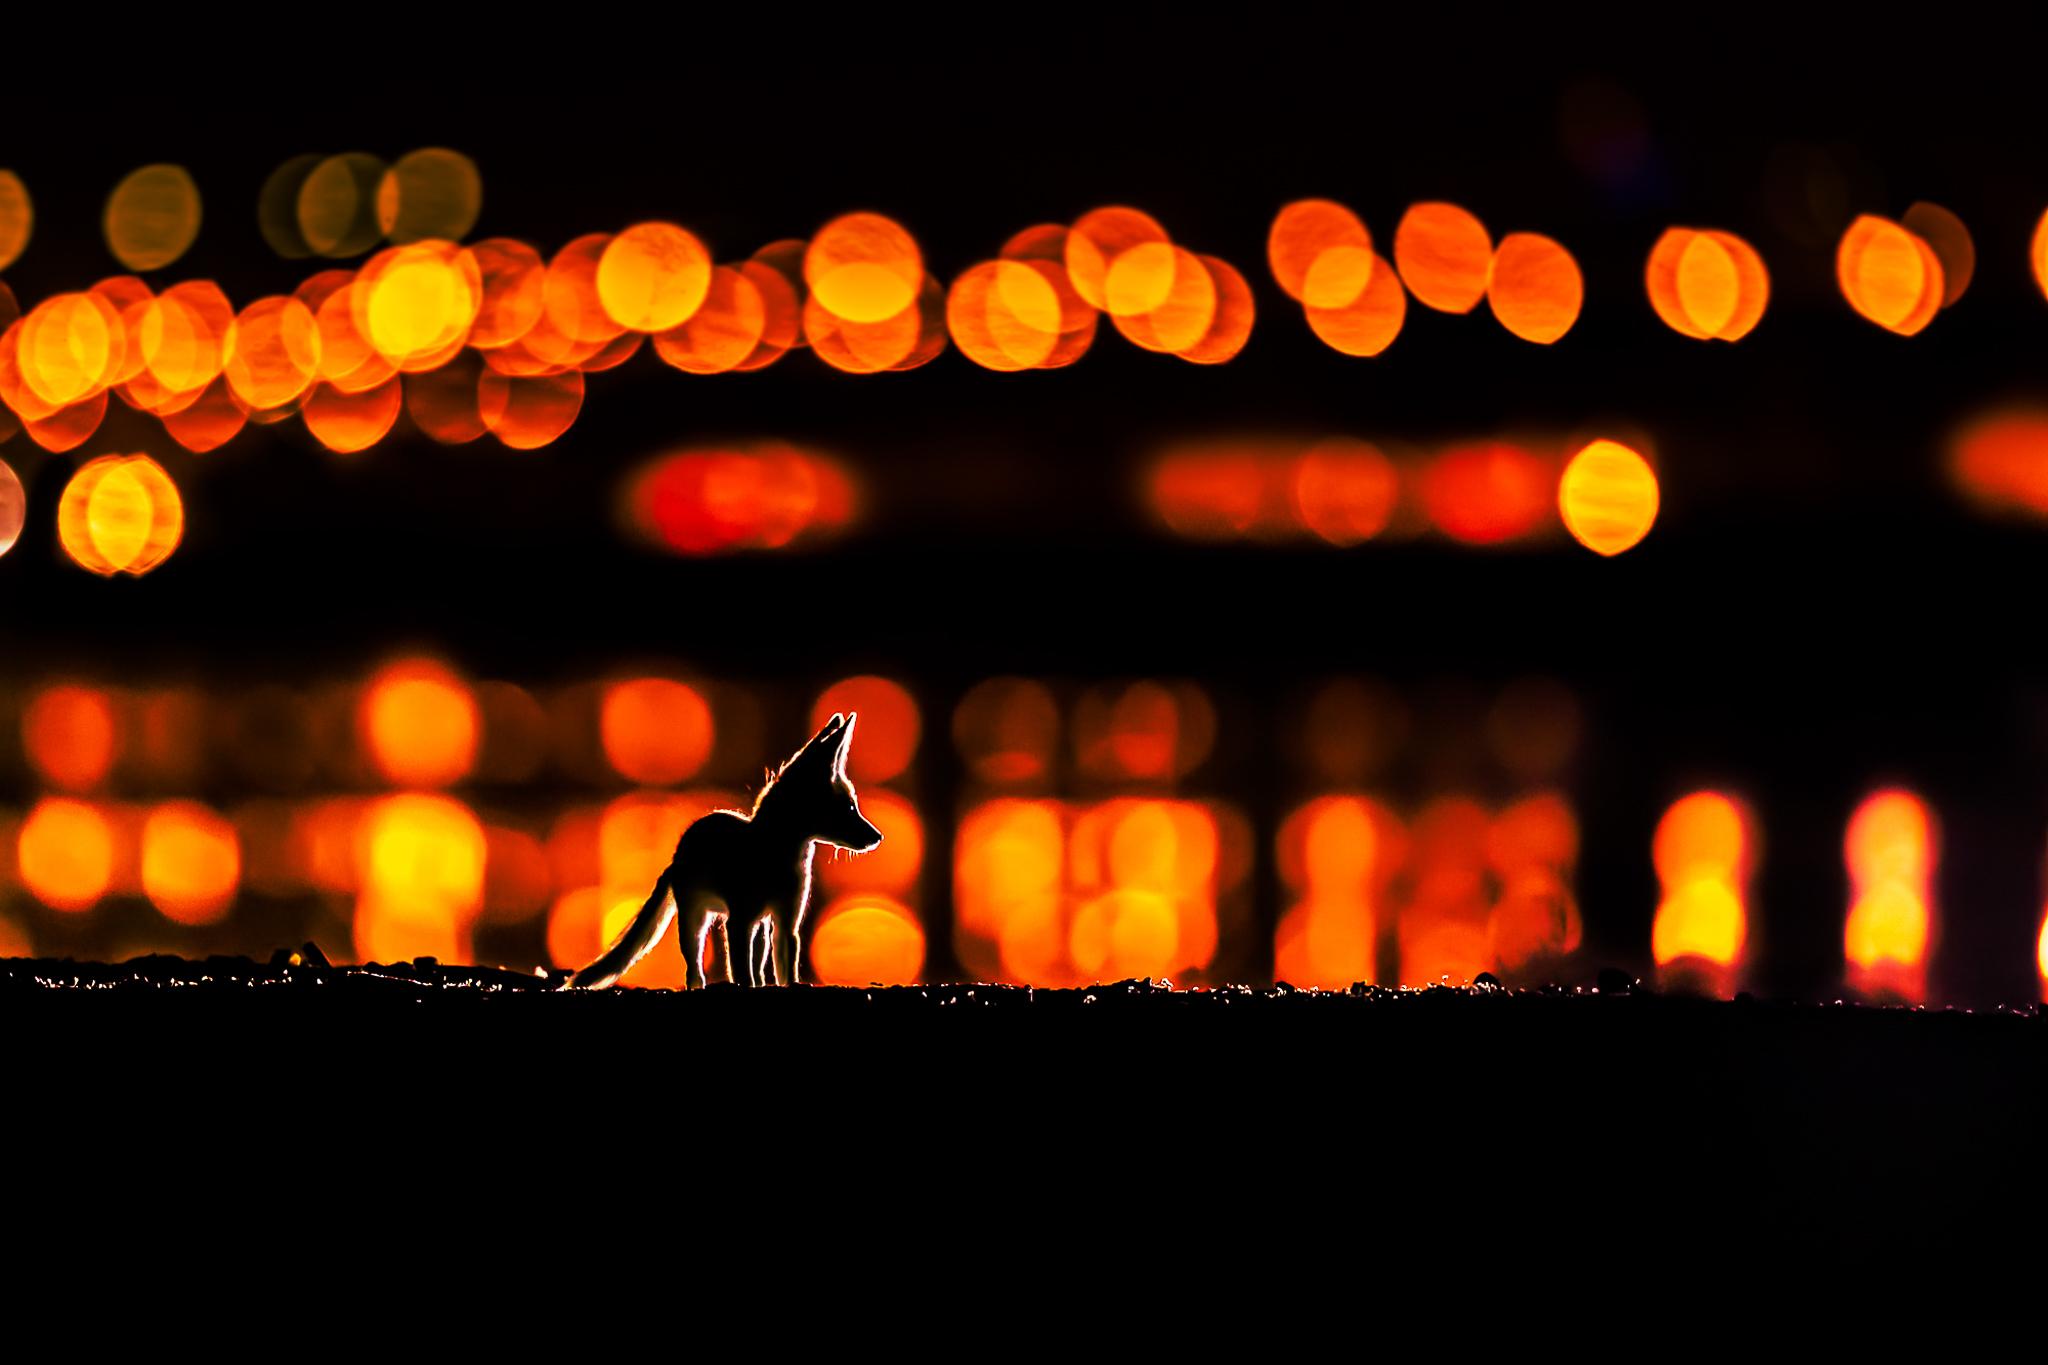 General 2048x1365 animals bokeh night Mohammad Murad Kuwait city lights fox baby animals silhouette low light